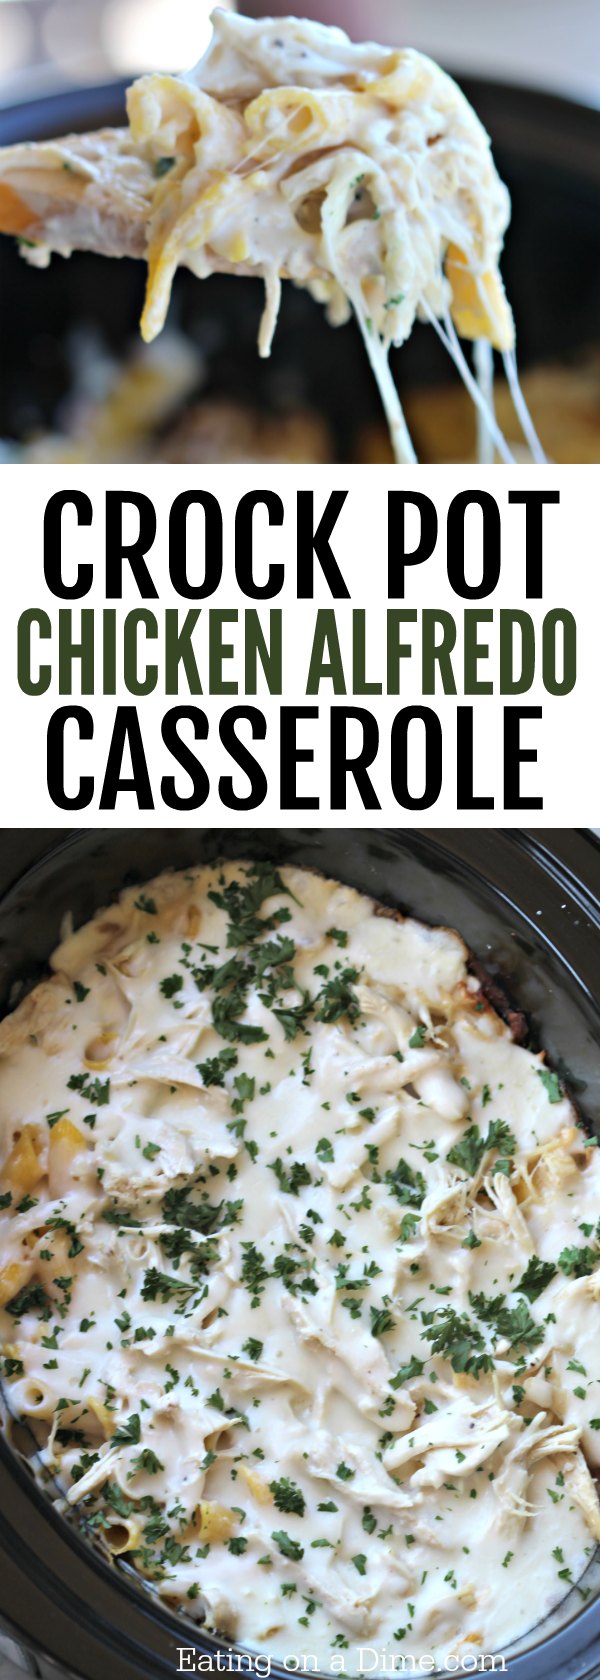 crock pot chicken Alfredo casserole recipe - Chicken ...